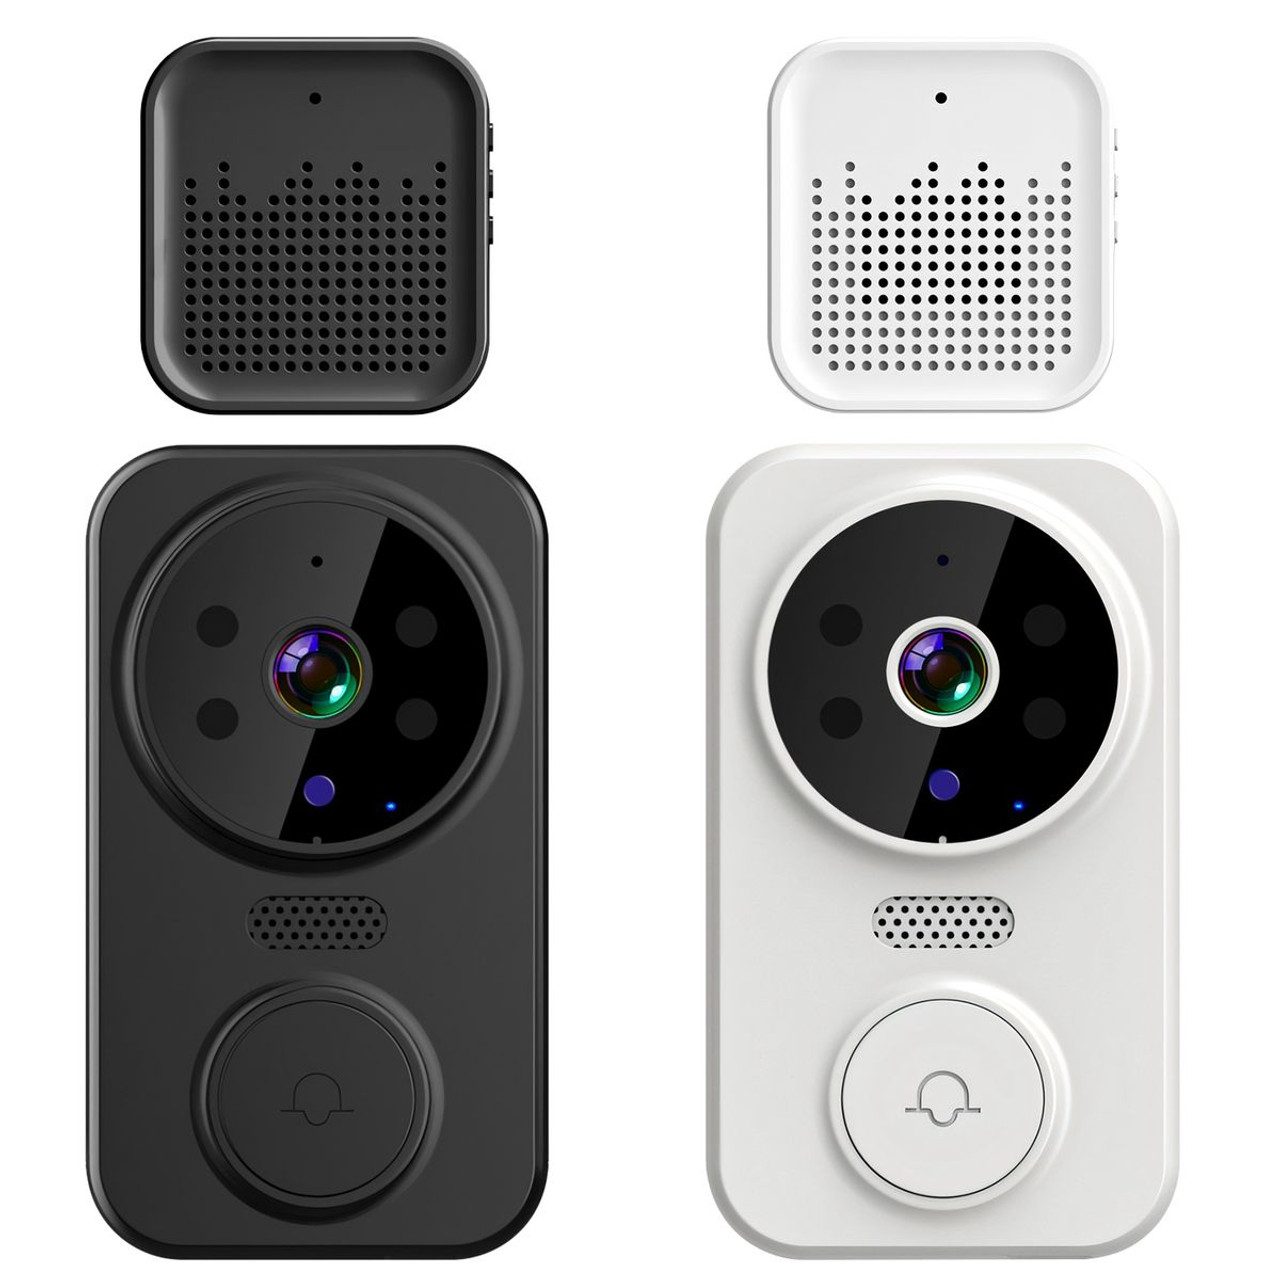 iMounTEK® 2-Way Intercom Visual Doorbell product image